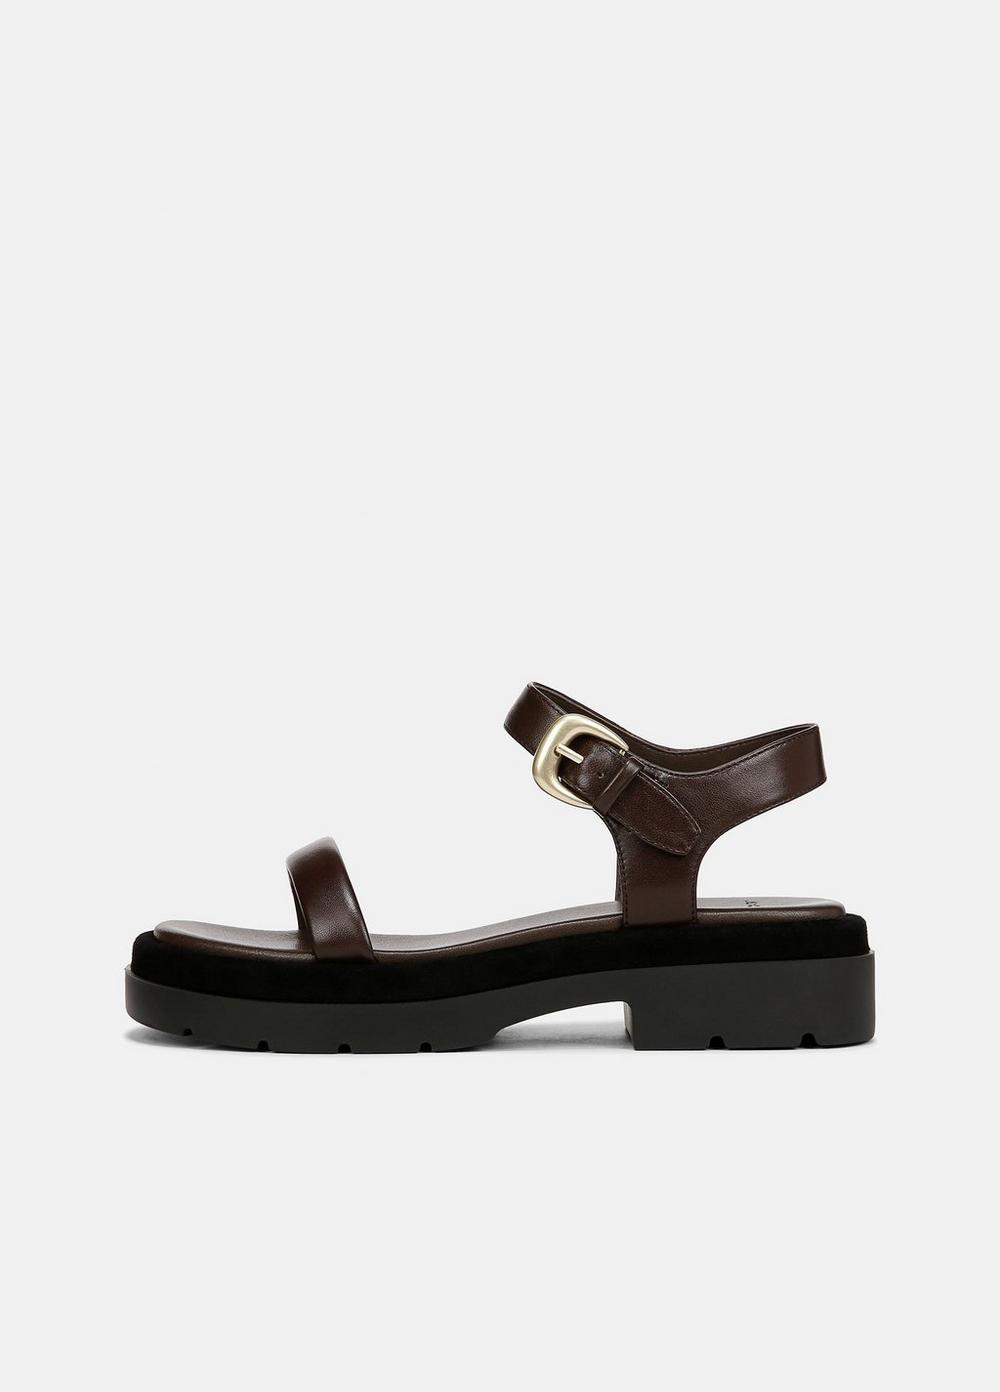 Heloise Leather Lug-Sole Sandal, Cacao Brown, Size 6.5 Vince